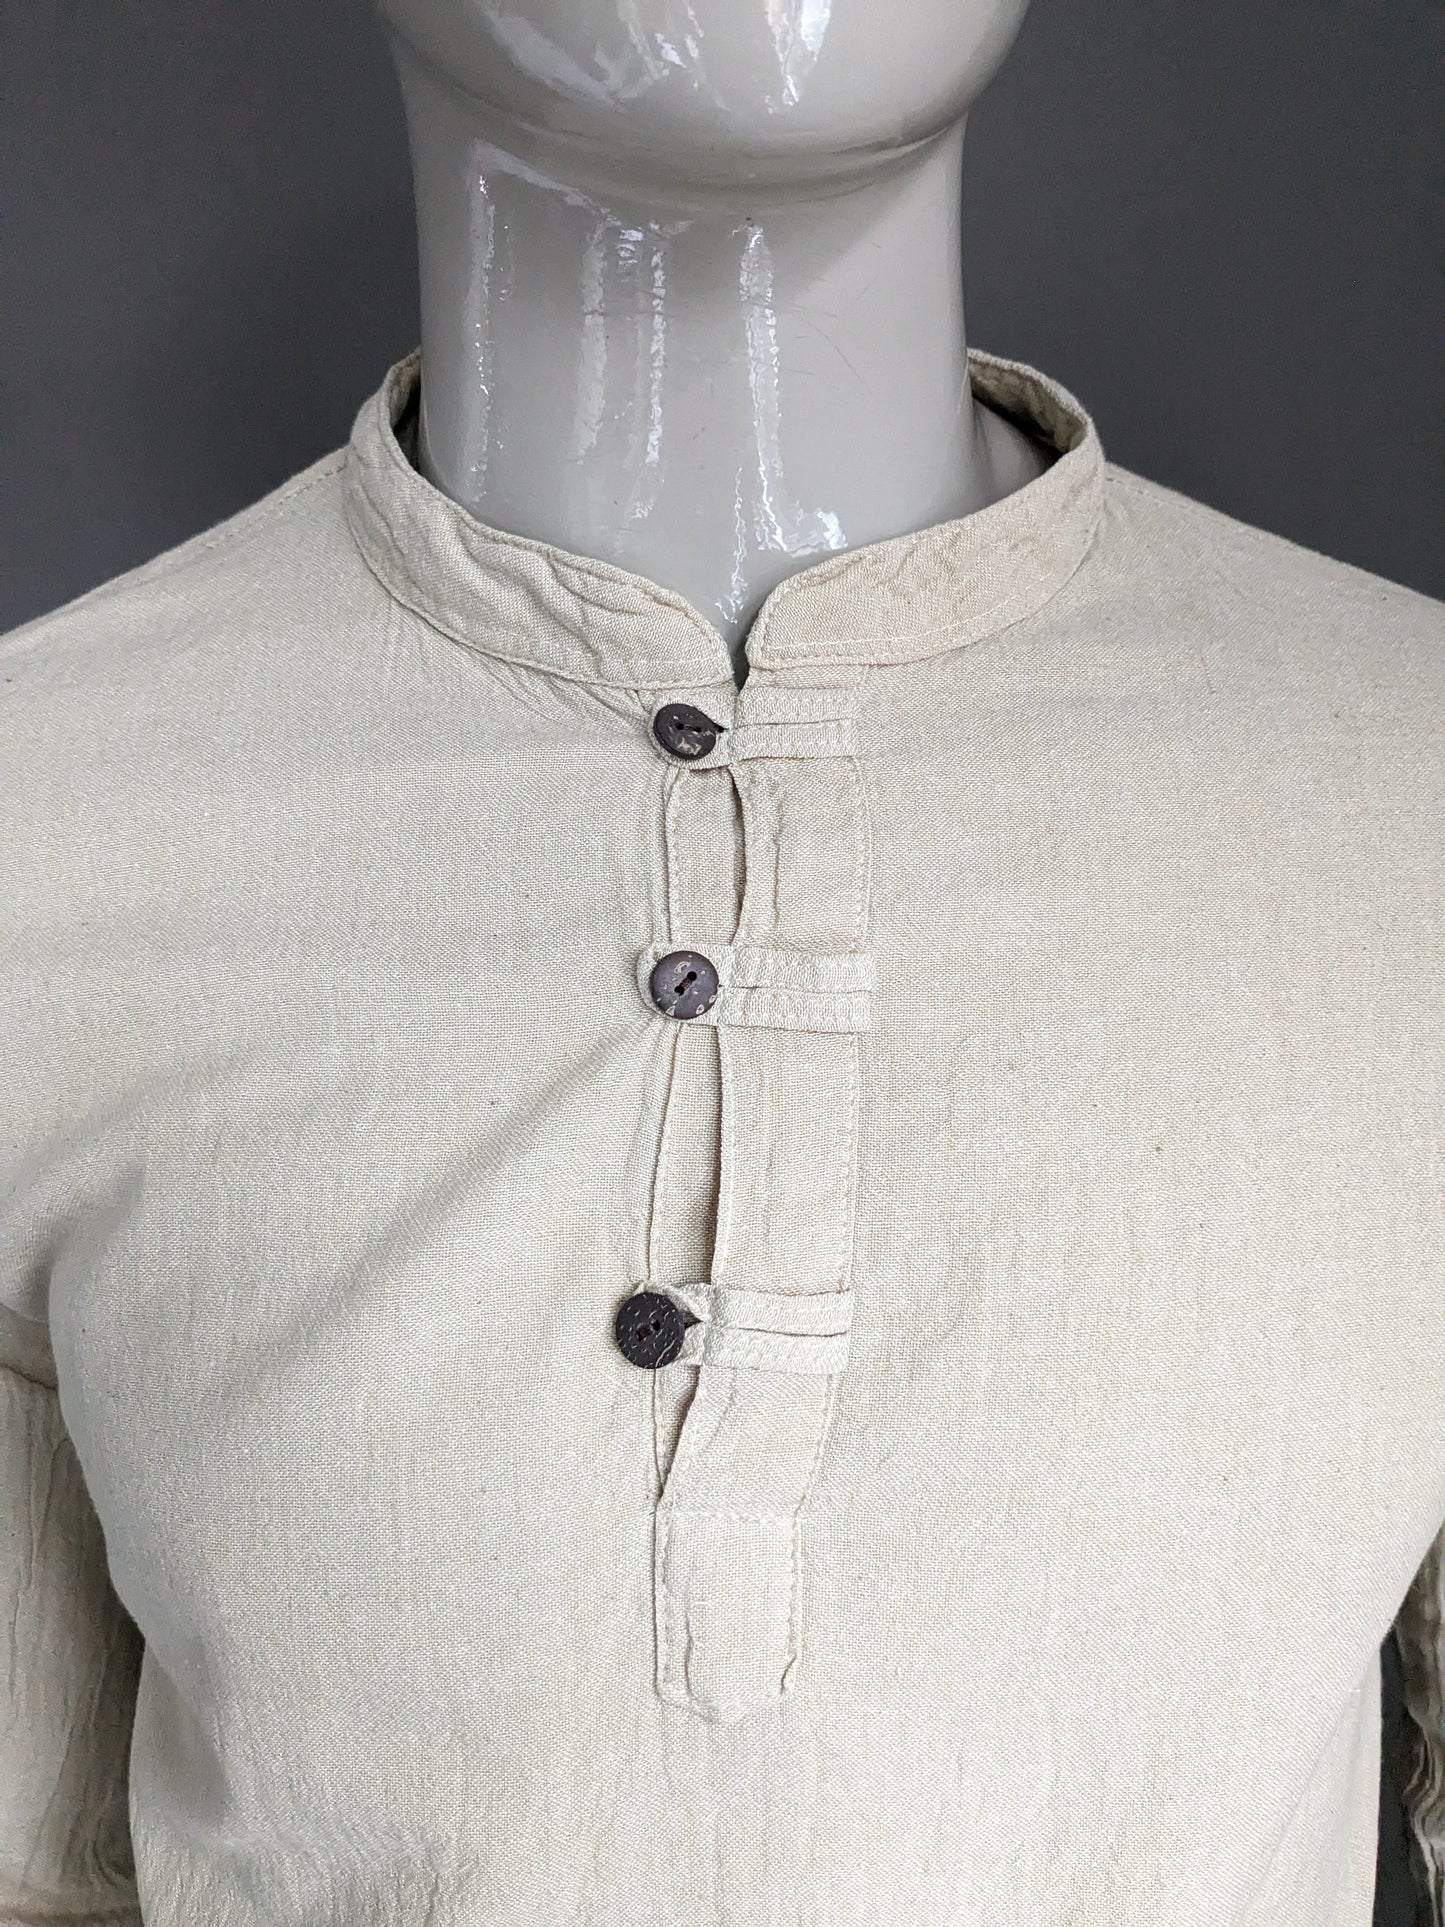 Vintage shirt / longsleeve lange mouw met knoopjes en Mao / opstaande kraag. Lichtbruin. Maat M.